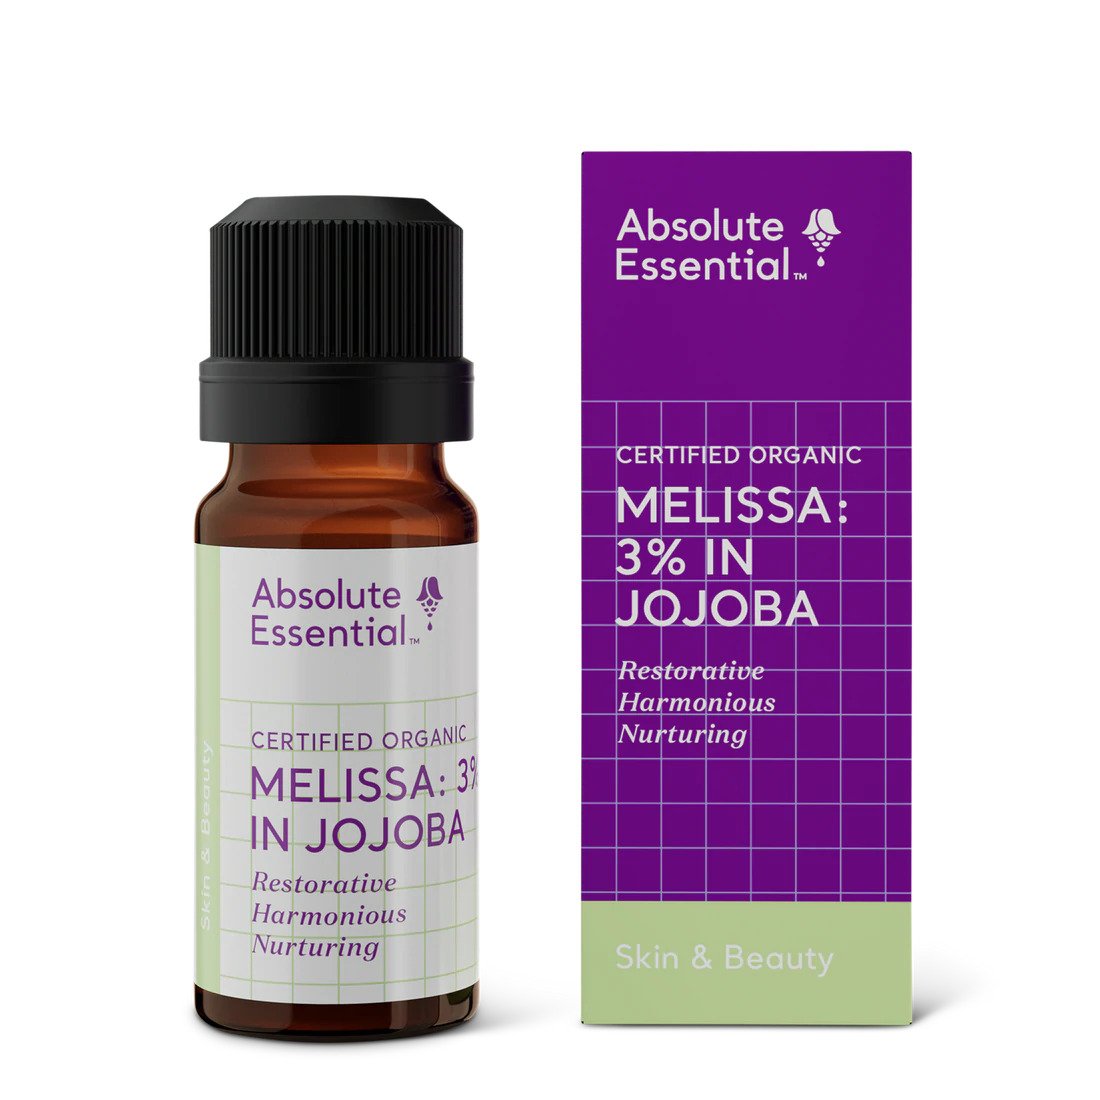 Absolute Essential Melissa 3% in Jojoba (organic)